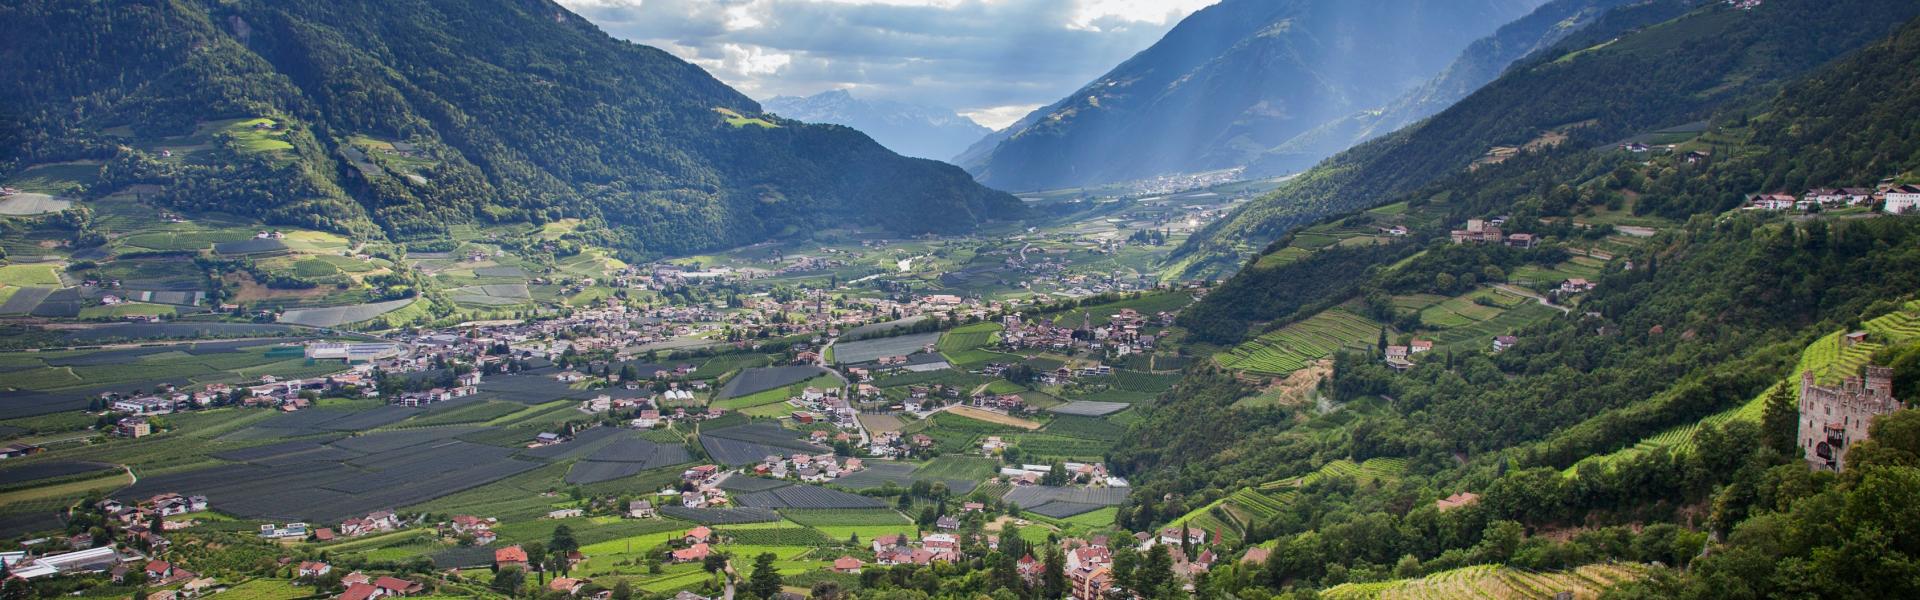 Tirolo/Dorf Tirol affittare case vacanze - Casamundo